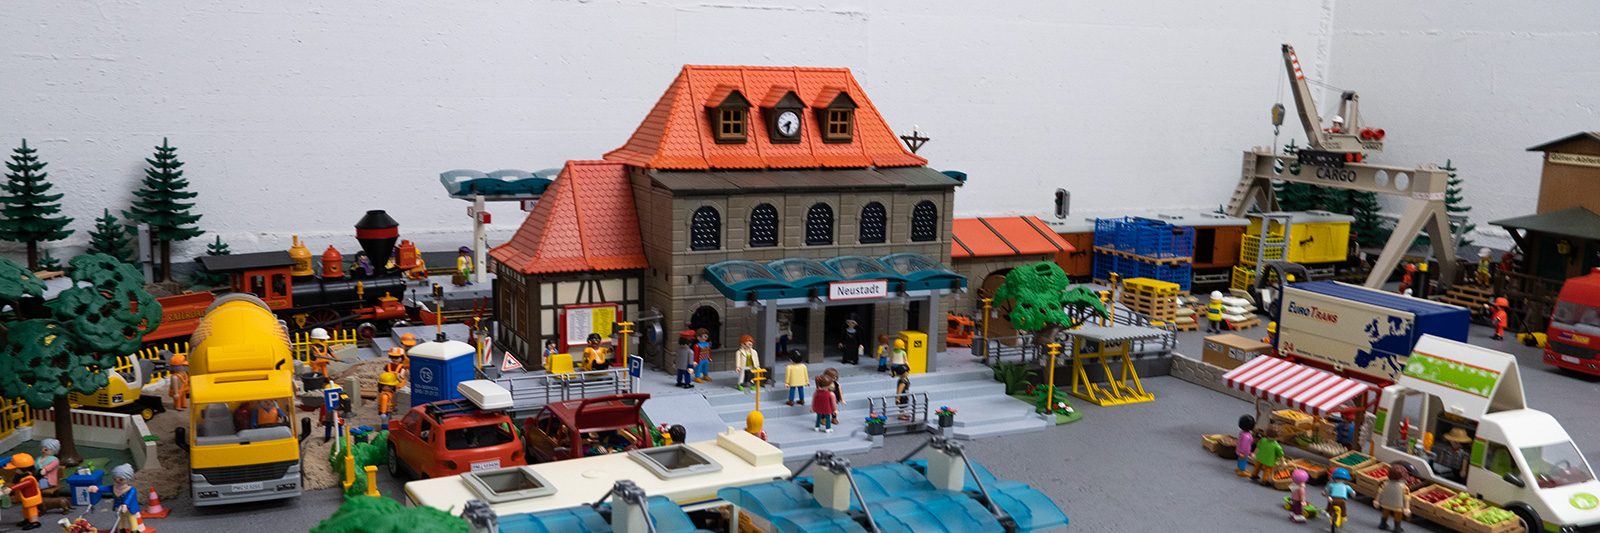 playmobil-diorama-bahnhof-neustadt